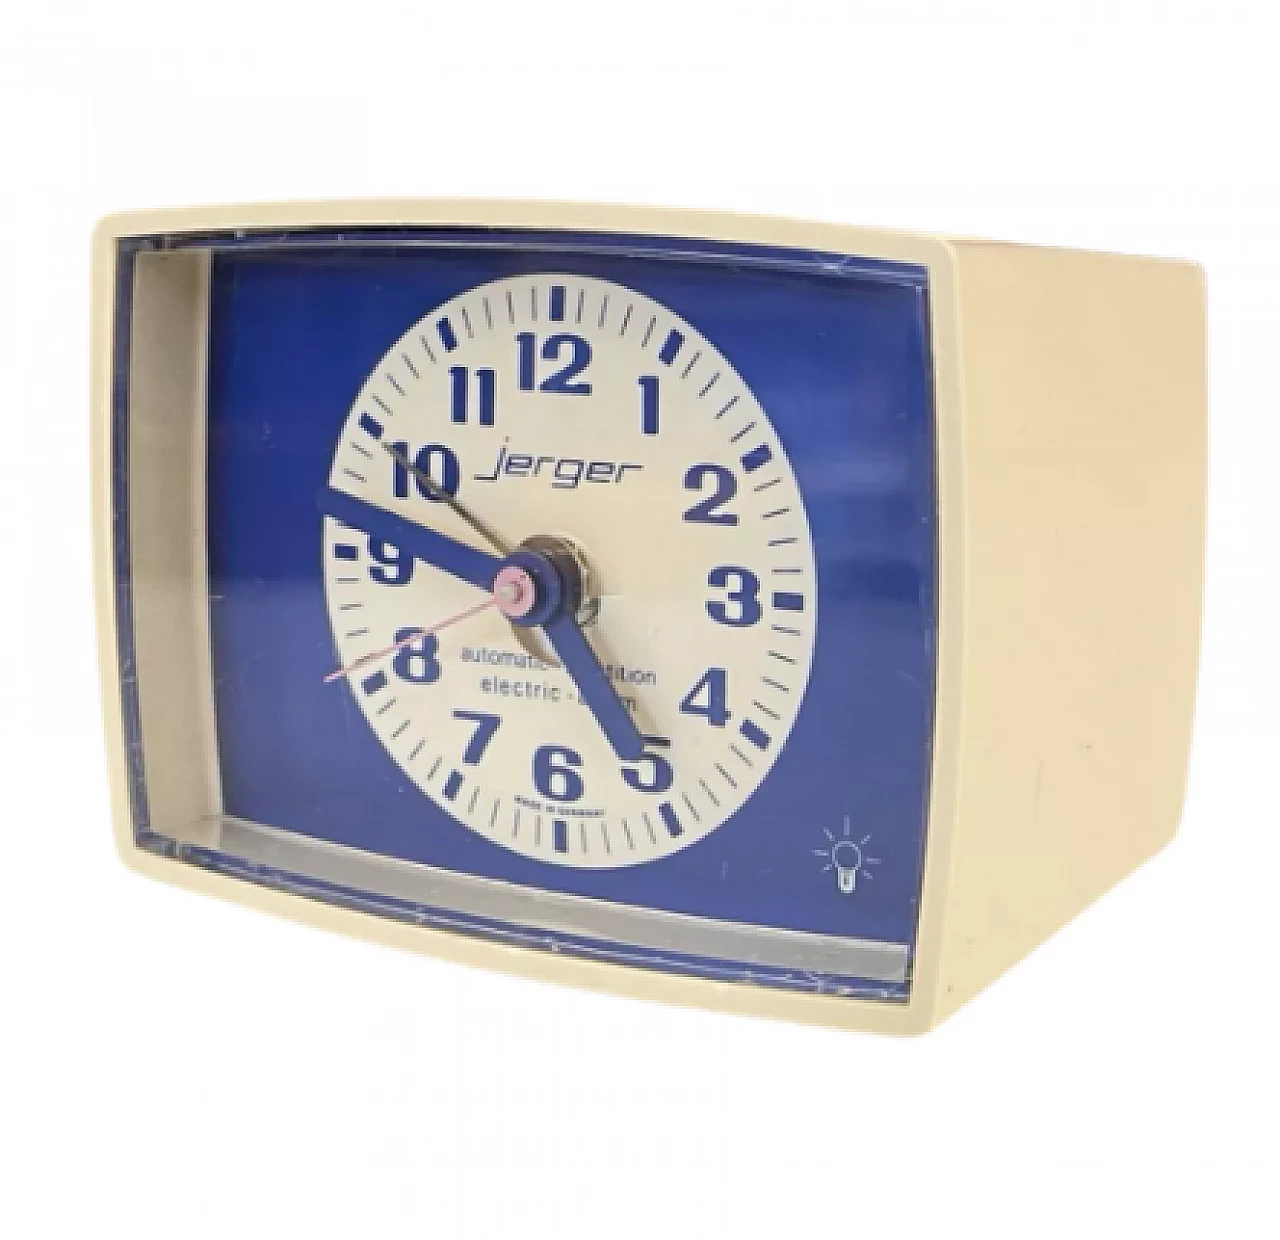 Beige and blue plastic Jerger alarm clock, 1970s 8